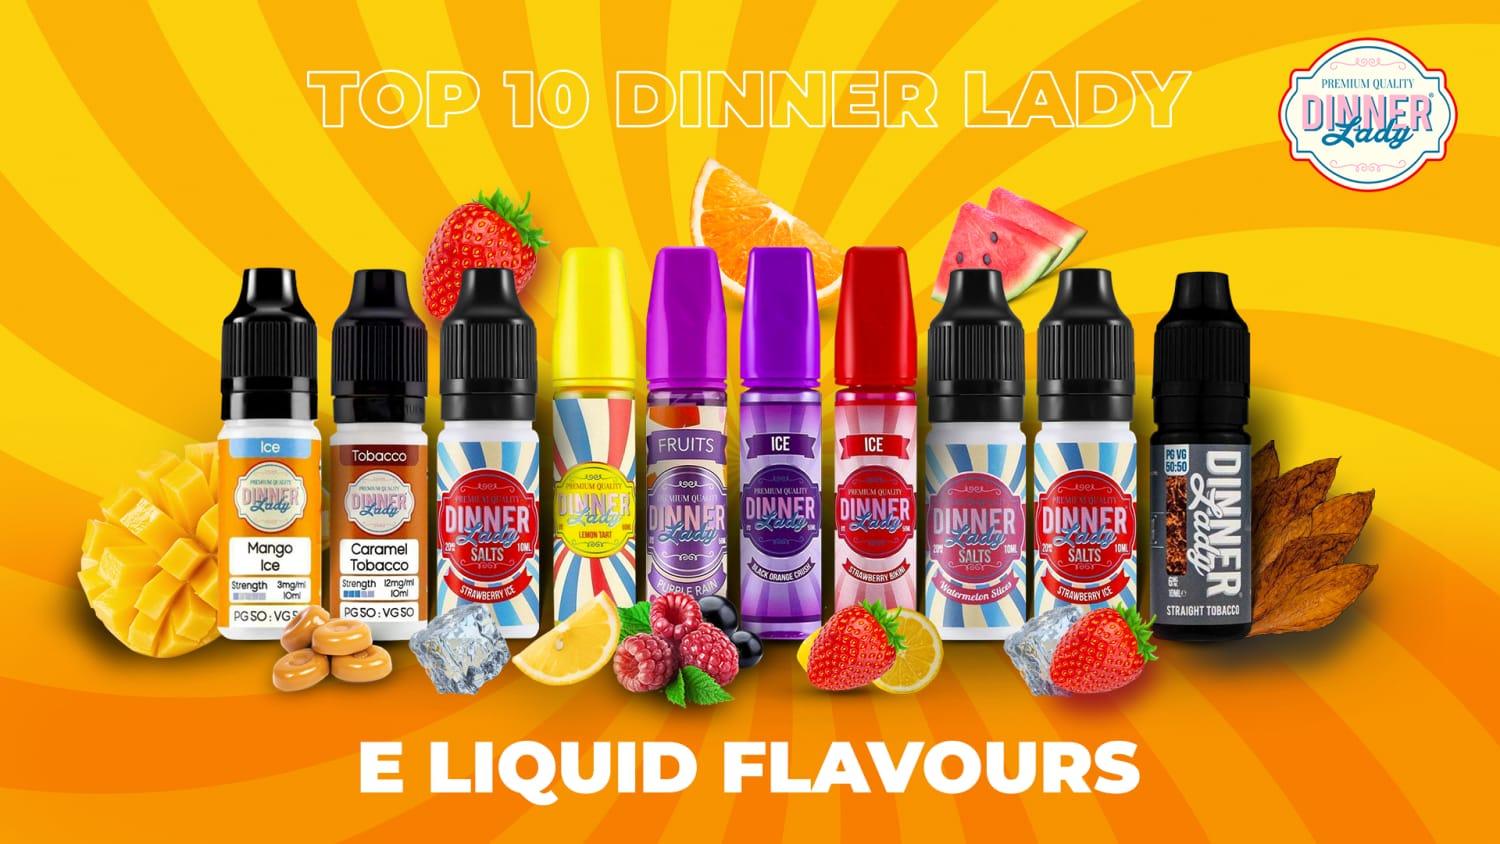 Dinner Lady E-Liquid Top 10 Flavours - Brand:Dinner Lady, Category:E-Liquids, Sub Category:Nicotine Salts, Sub Category:Shortfills, Sub Category:Starter Liquids